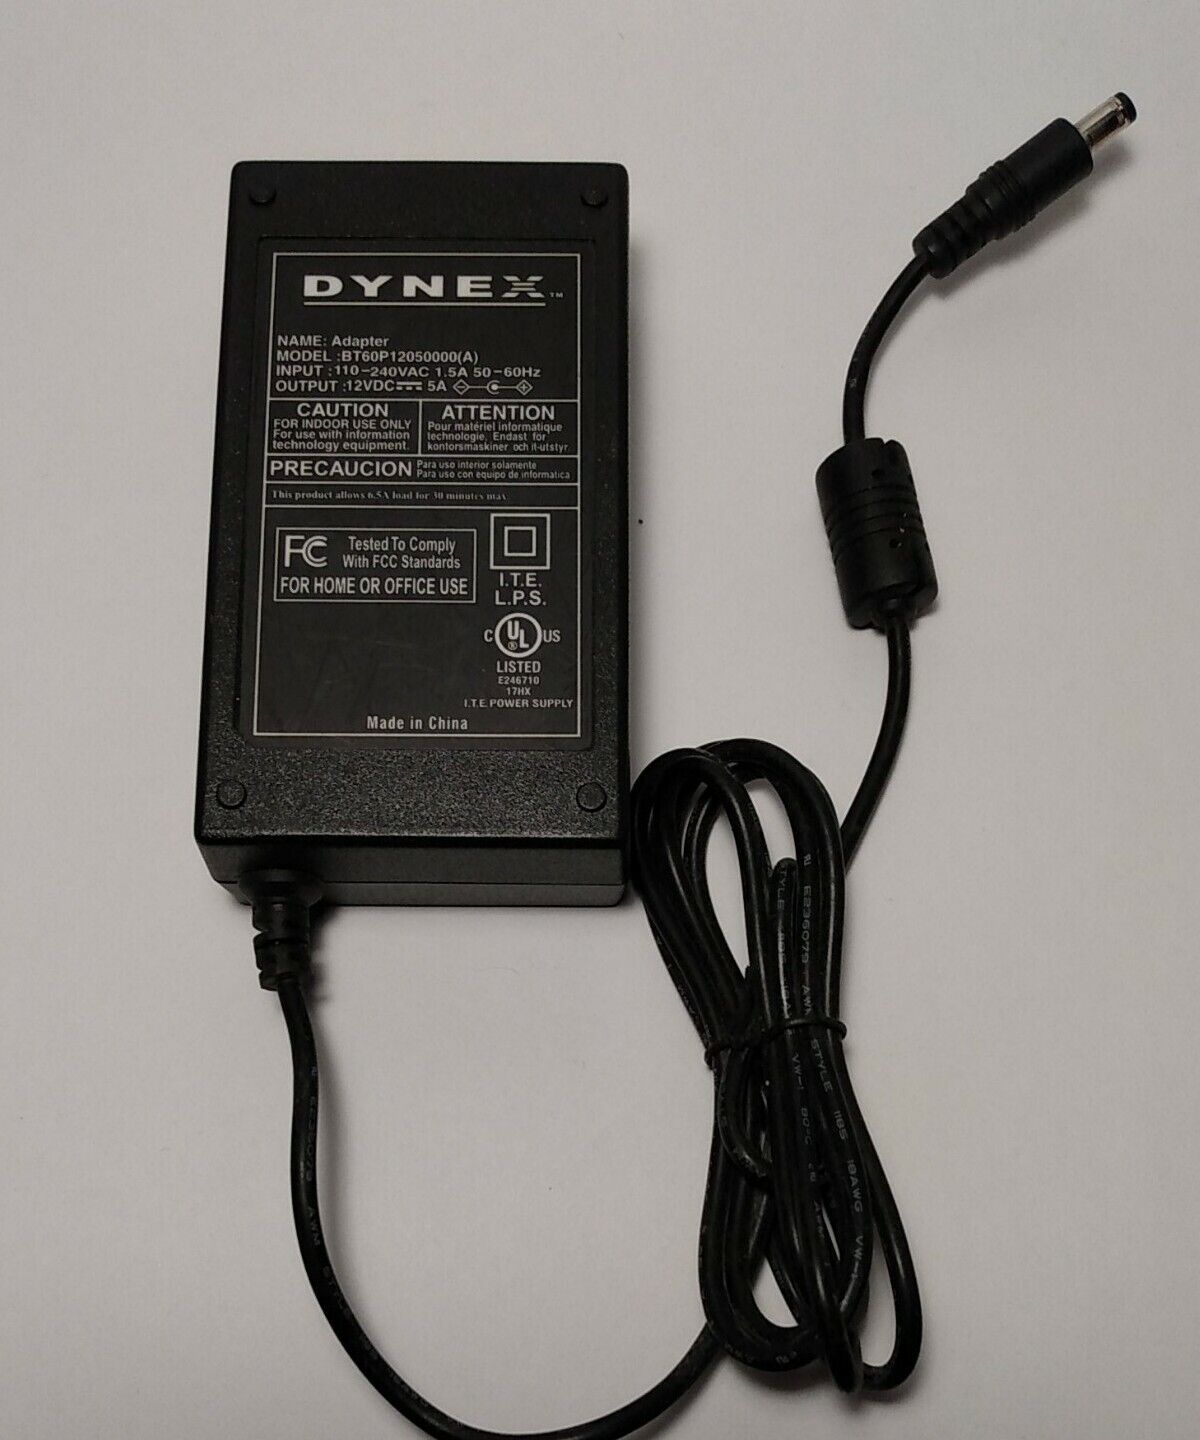 Dynex BT60P12050000(A) Power Supply AC Adapter DC 12V 5A ( No Power Cord) Brand: Dynex Type: Adapter Custom Bundle - Click Image to Close